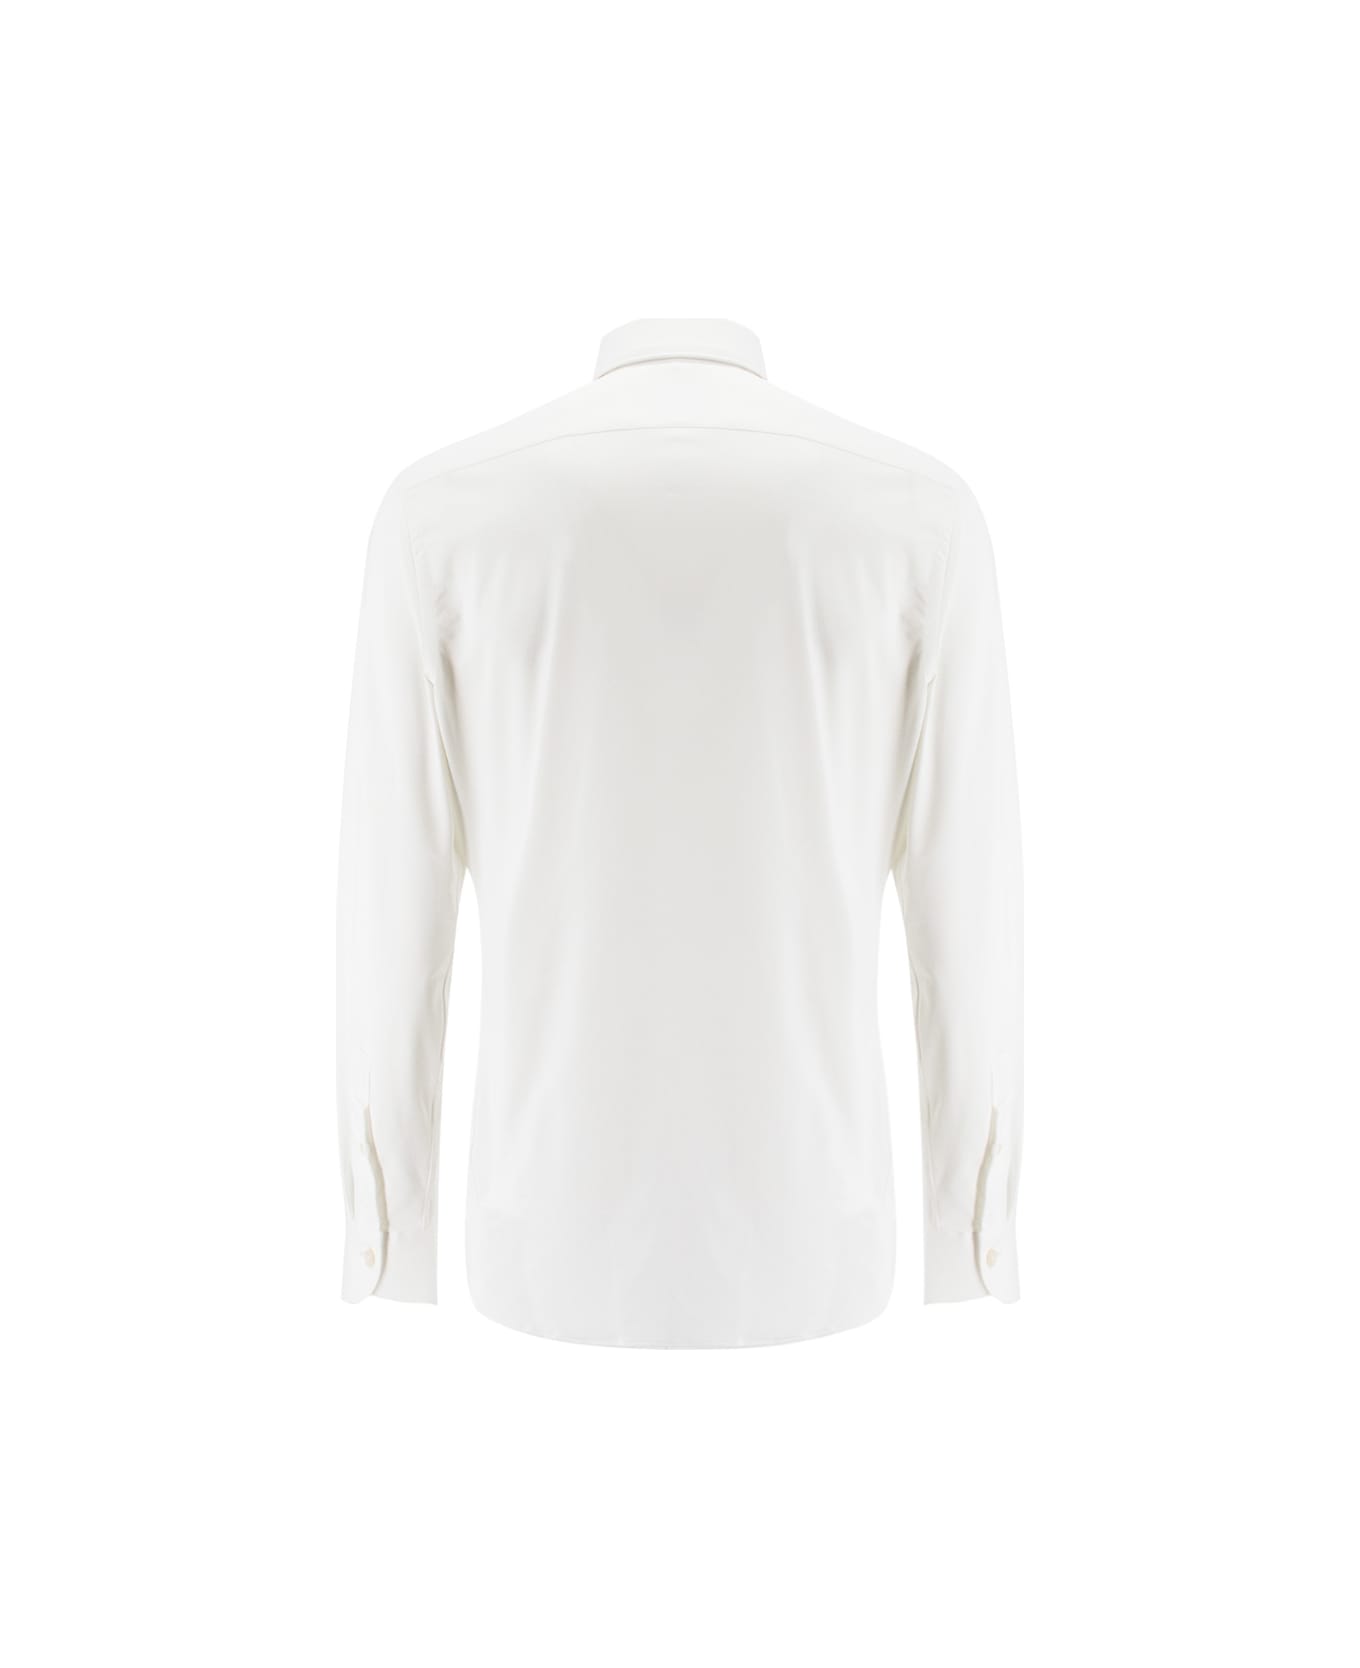 Xacus Shirt - BIANCO シャツ